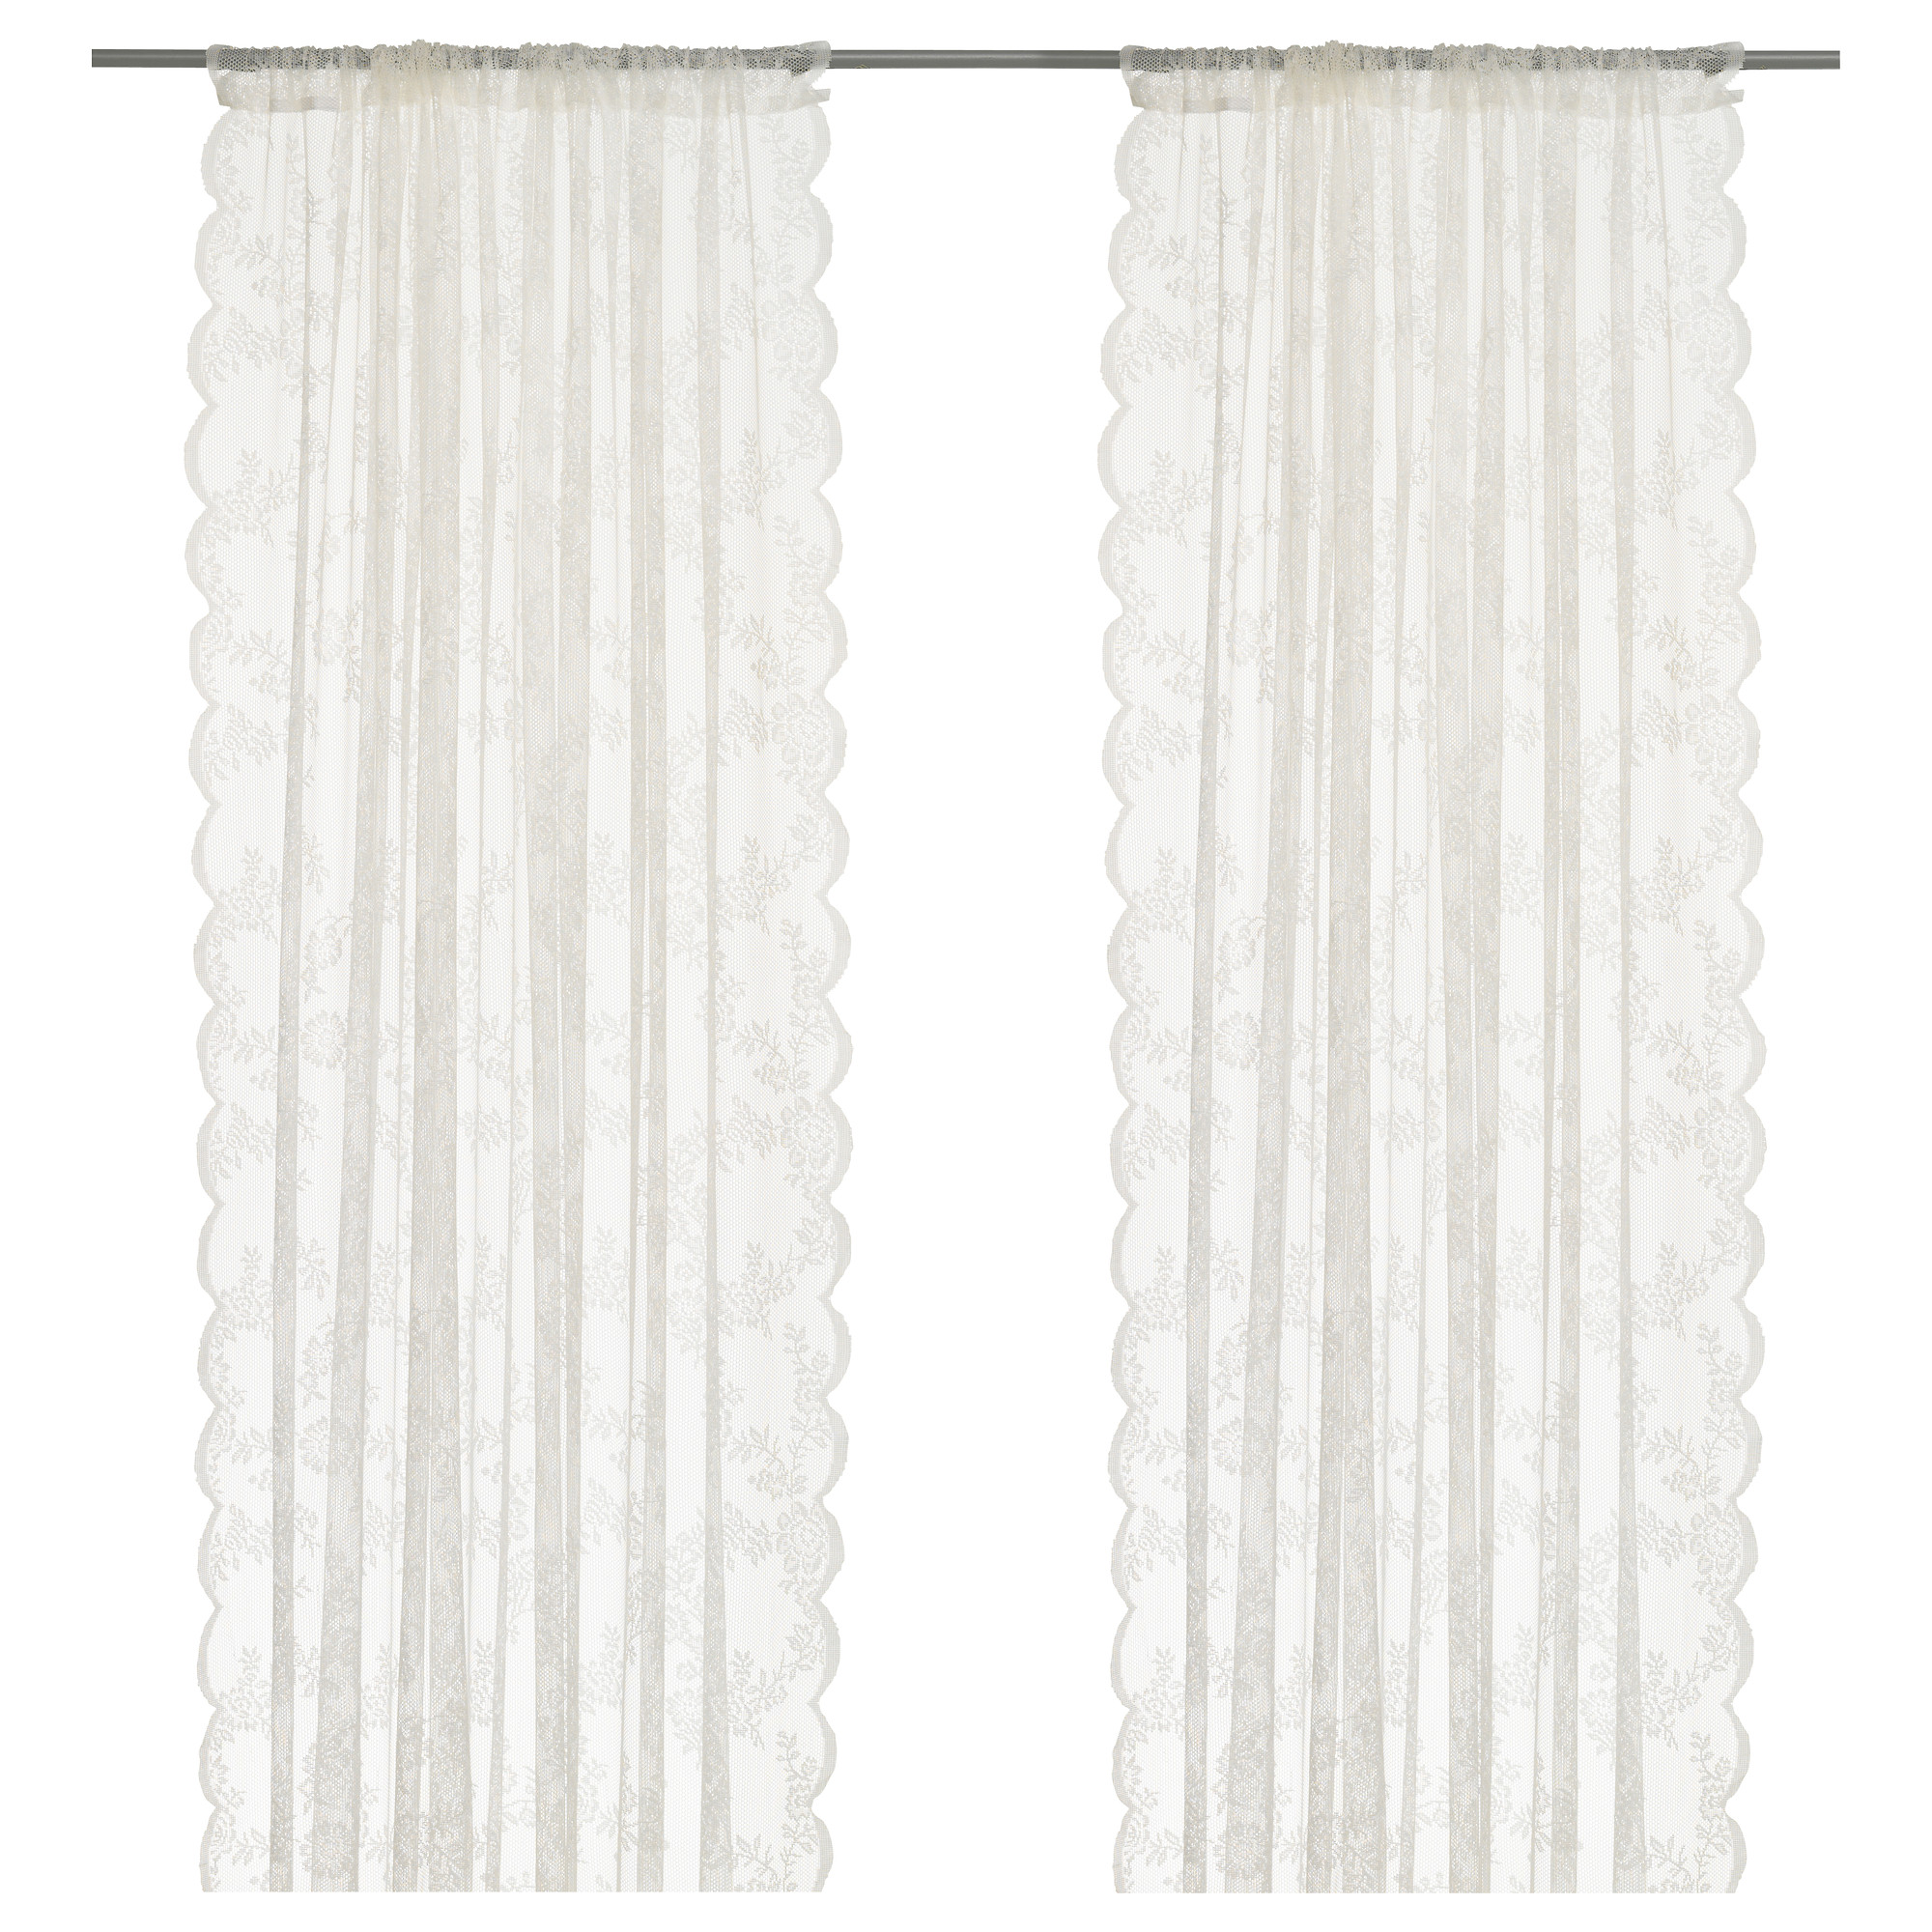 Amazing ALVINE SPETS Lace curtains, 1 pair - IKEA white lace curtains